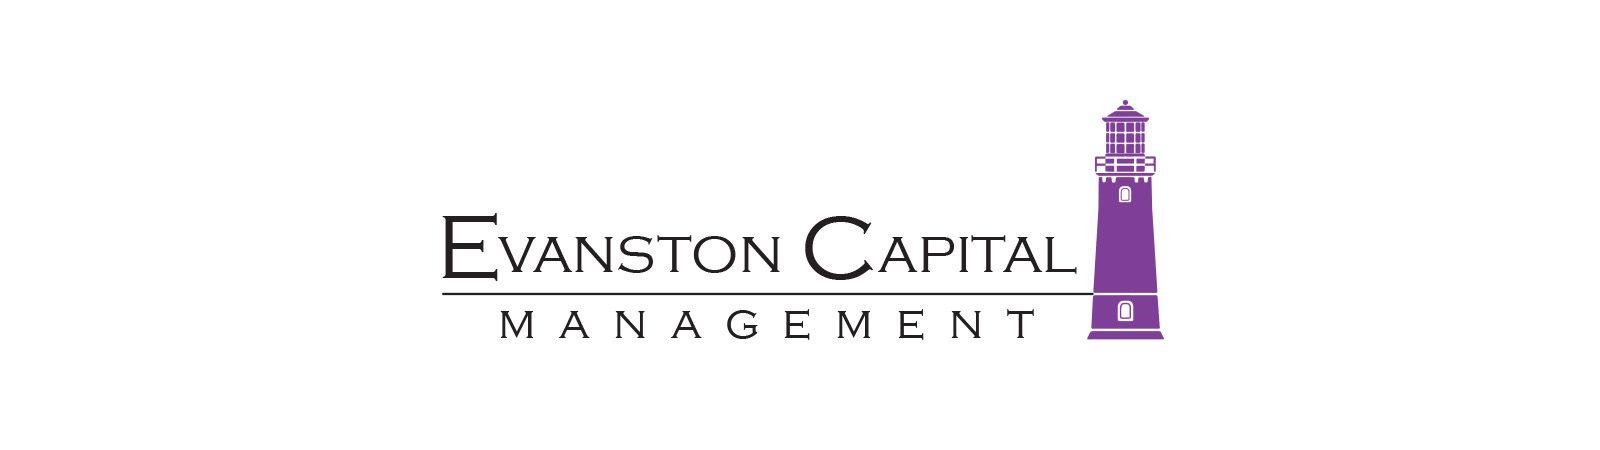 Evanston Logo - Evanston Capital Management | Financial Services Sector | TA | A ...